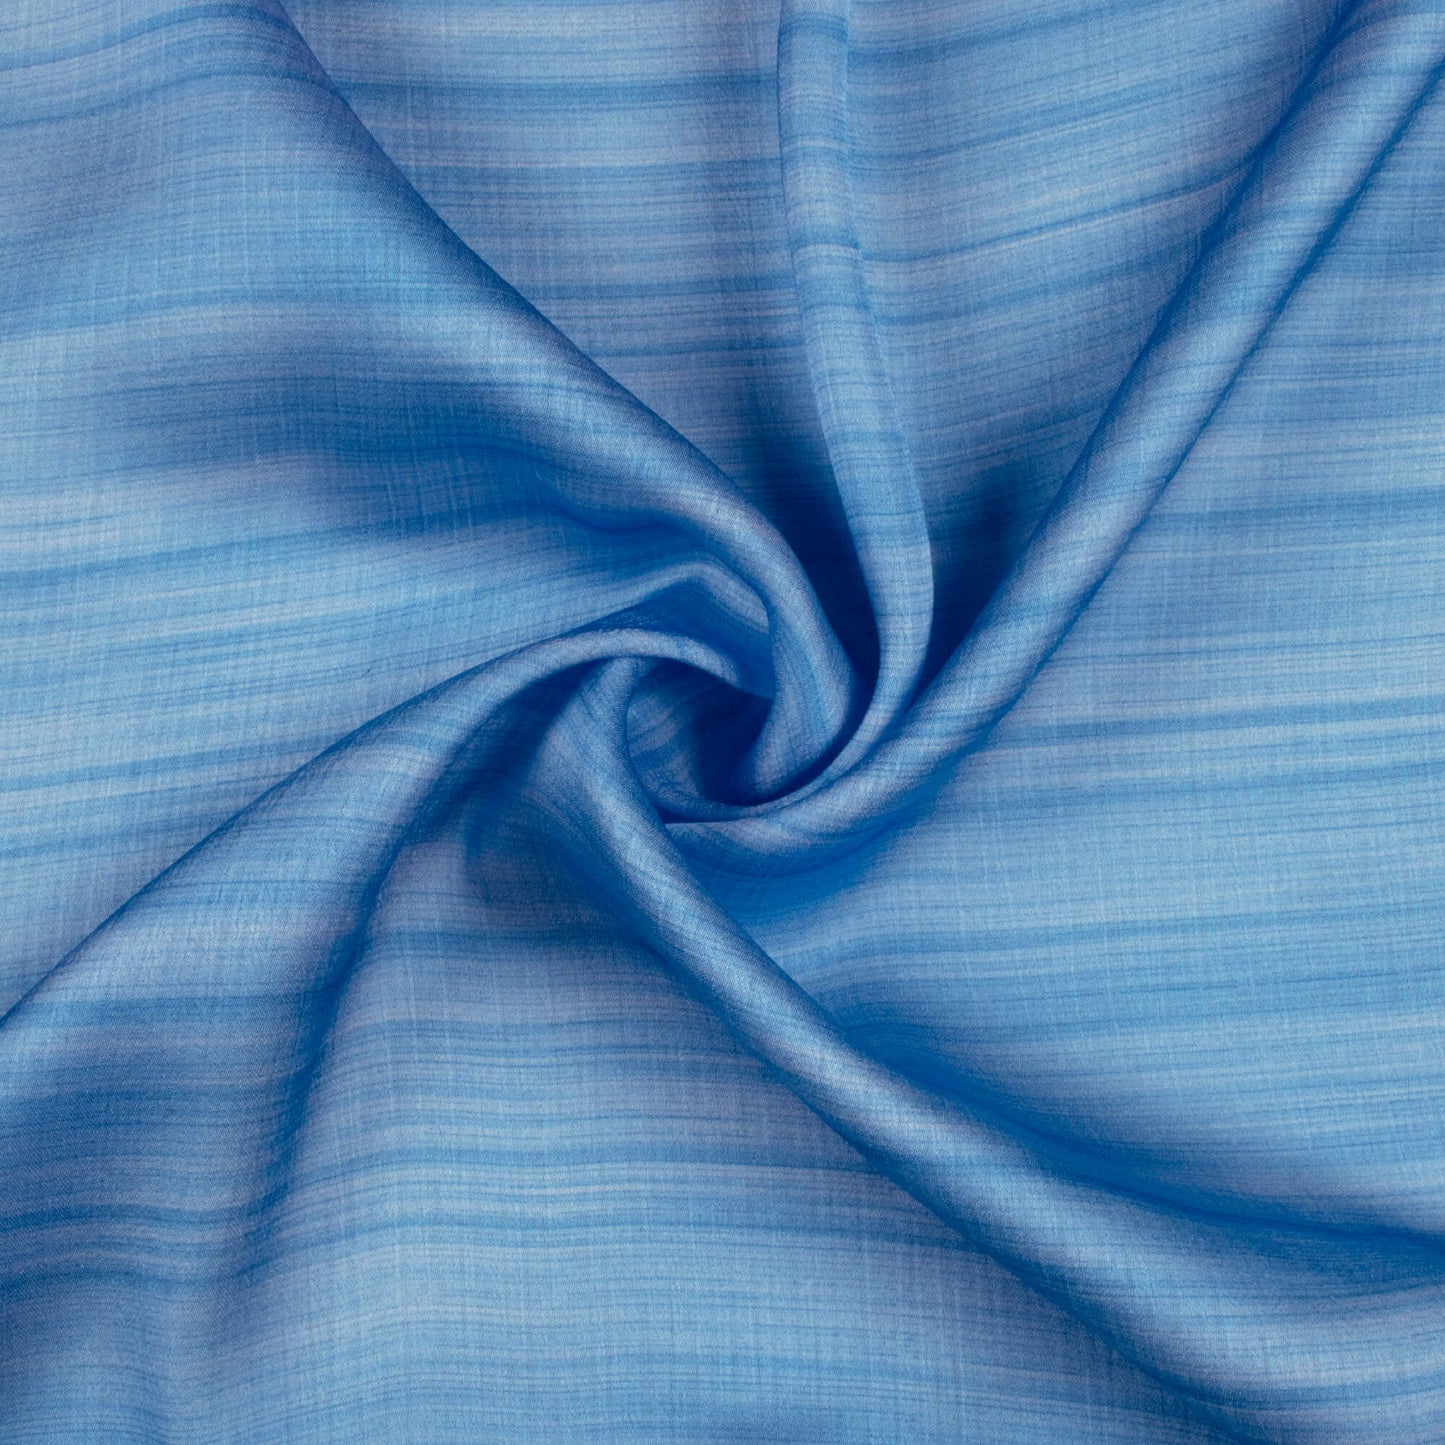 Curious Blue Texture Pattern Digital Print Chiffon Satin Fabric